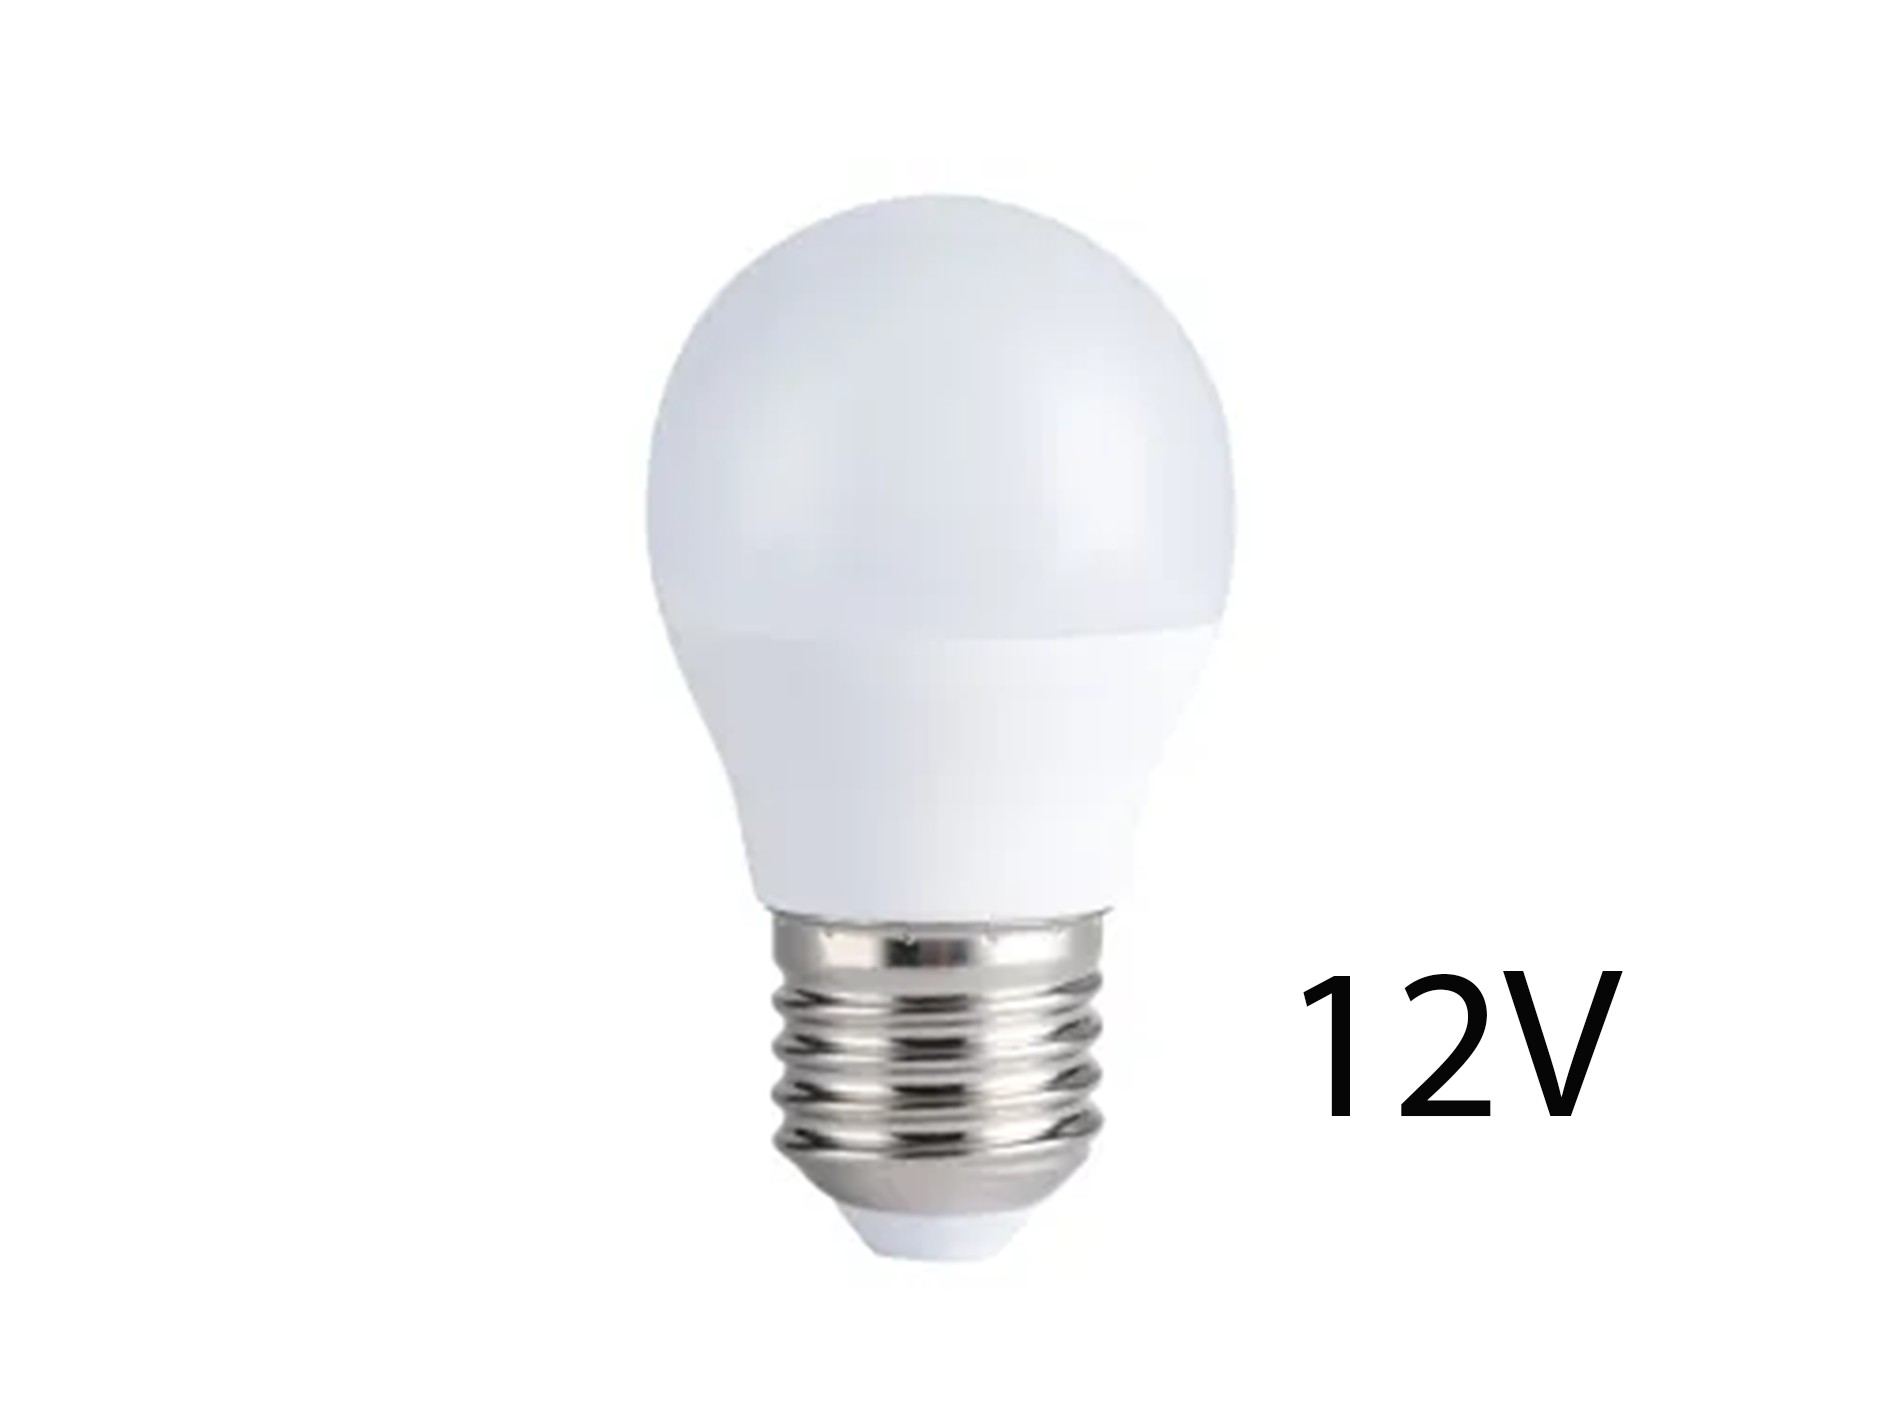 Sure bathing Solve 4W LED lampa - G45, E27, 12V - LEDMegaStore.se